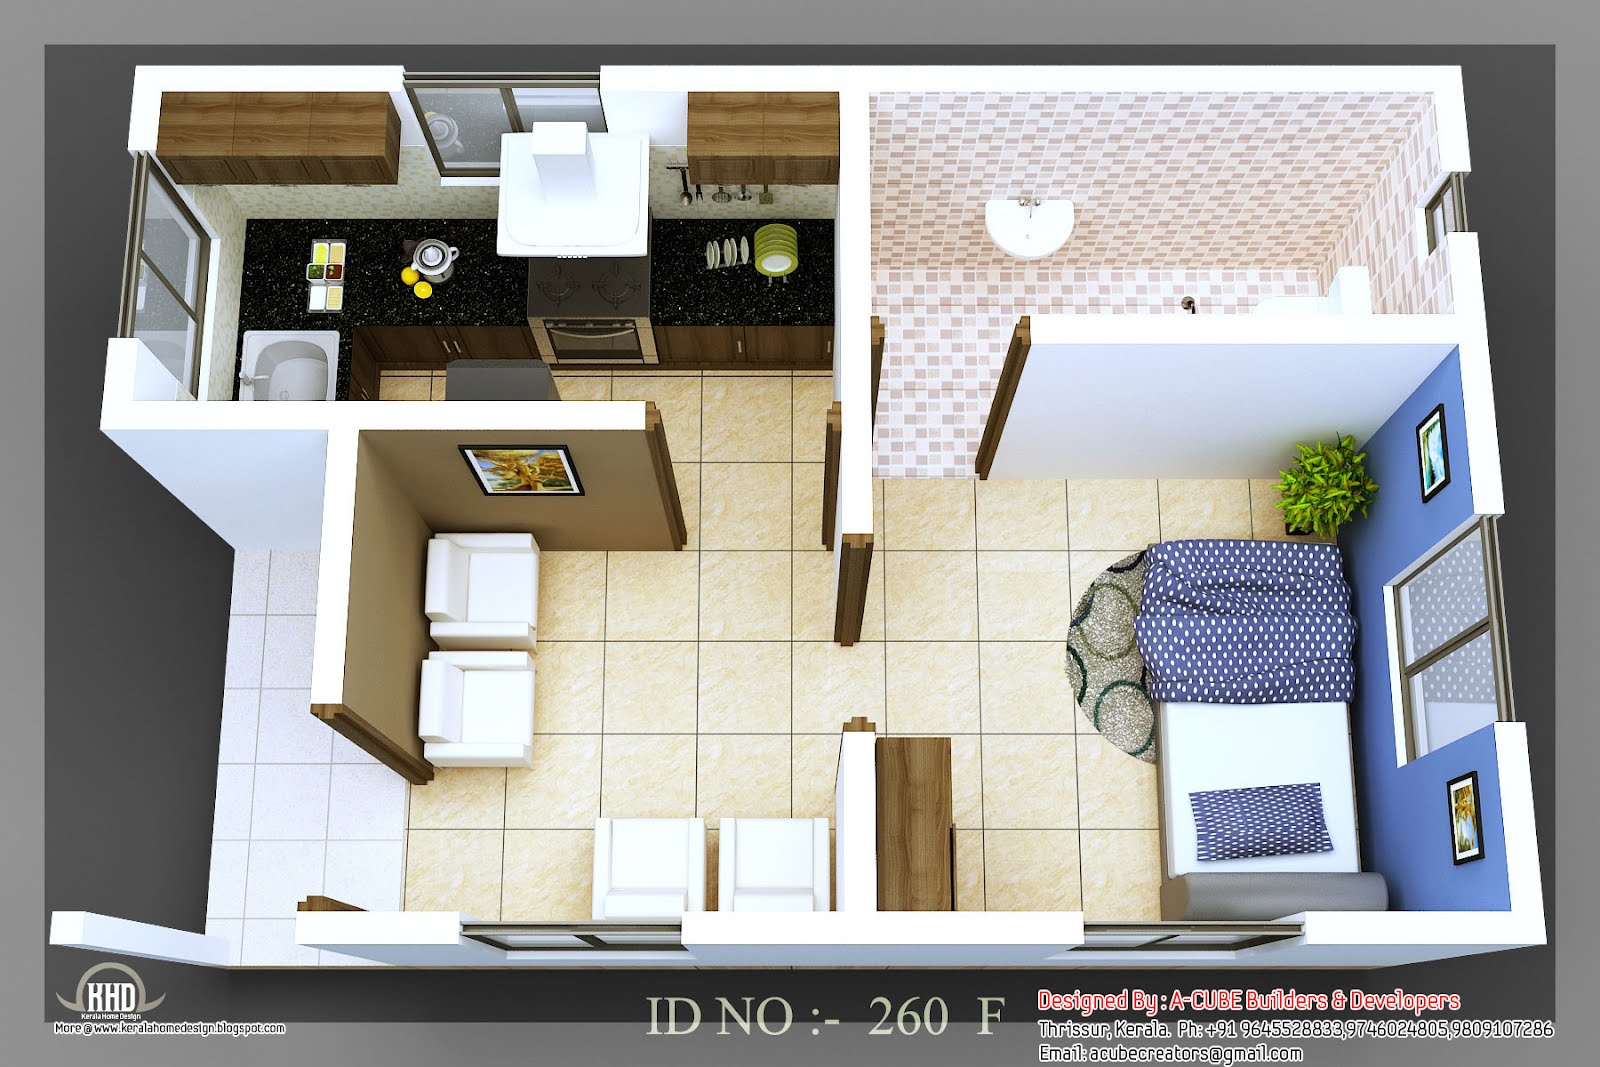 2 Bedroom Studio Apartment Plans